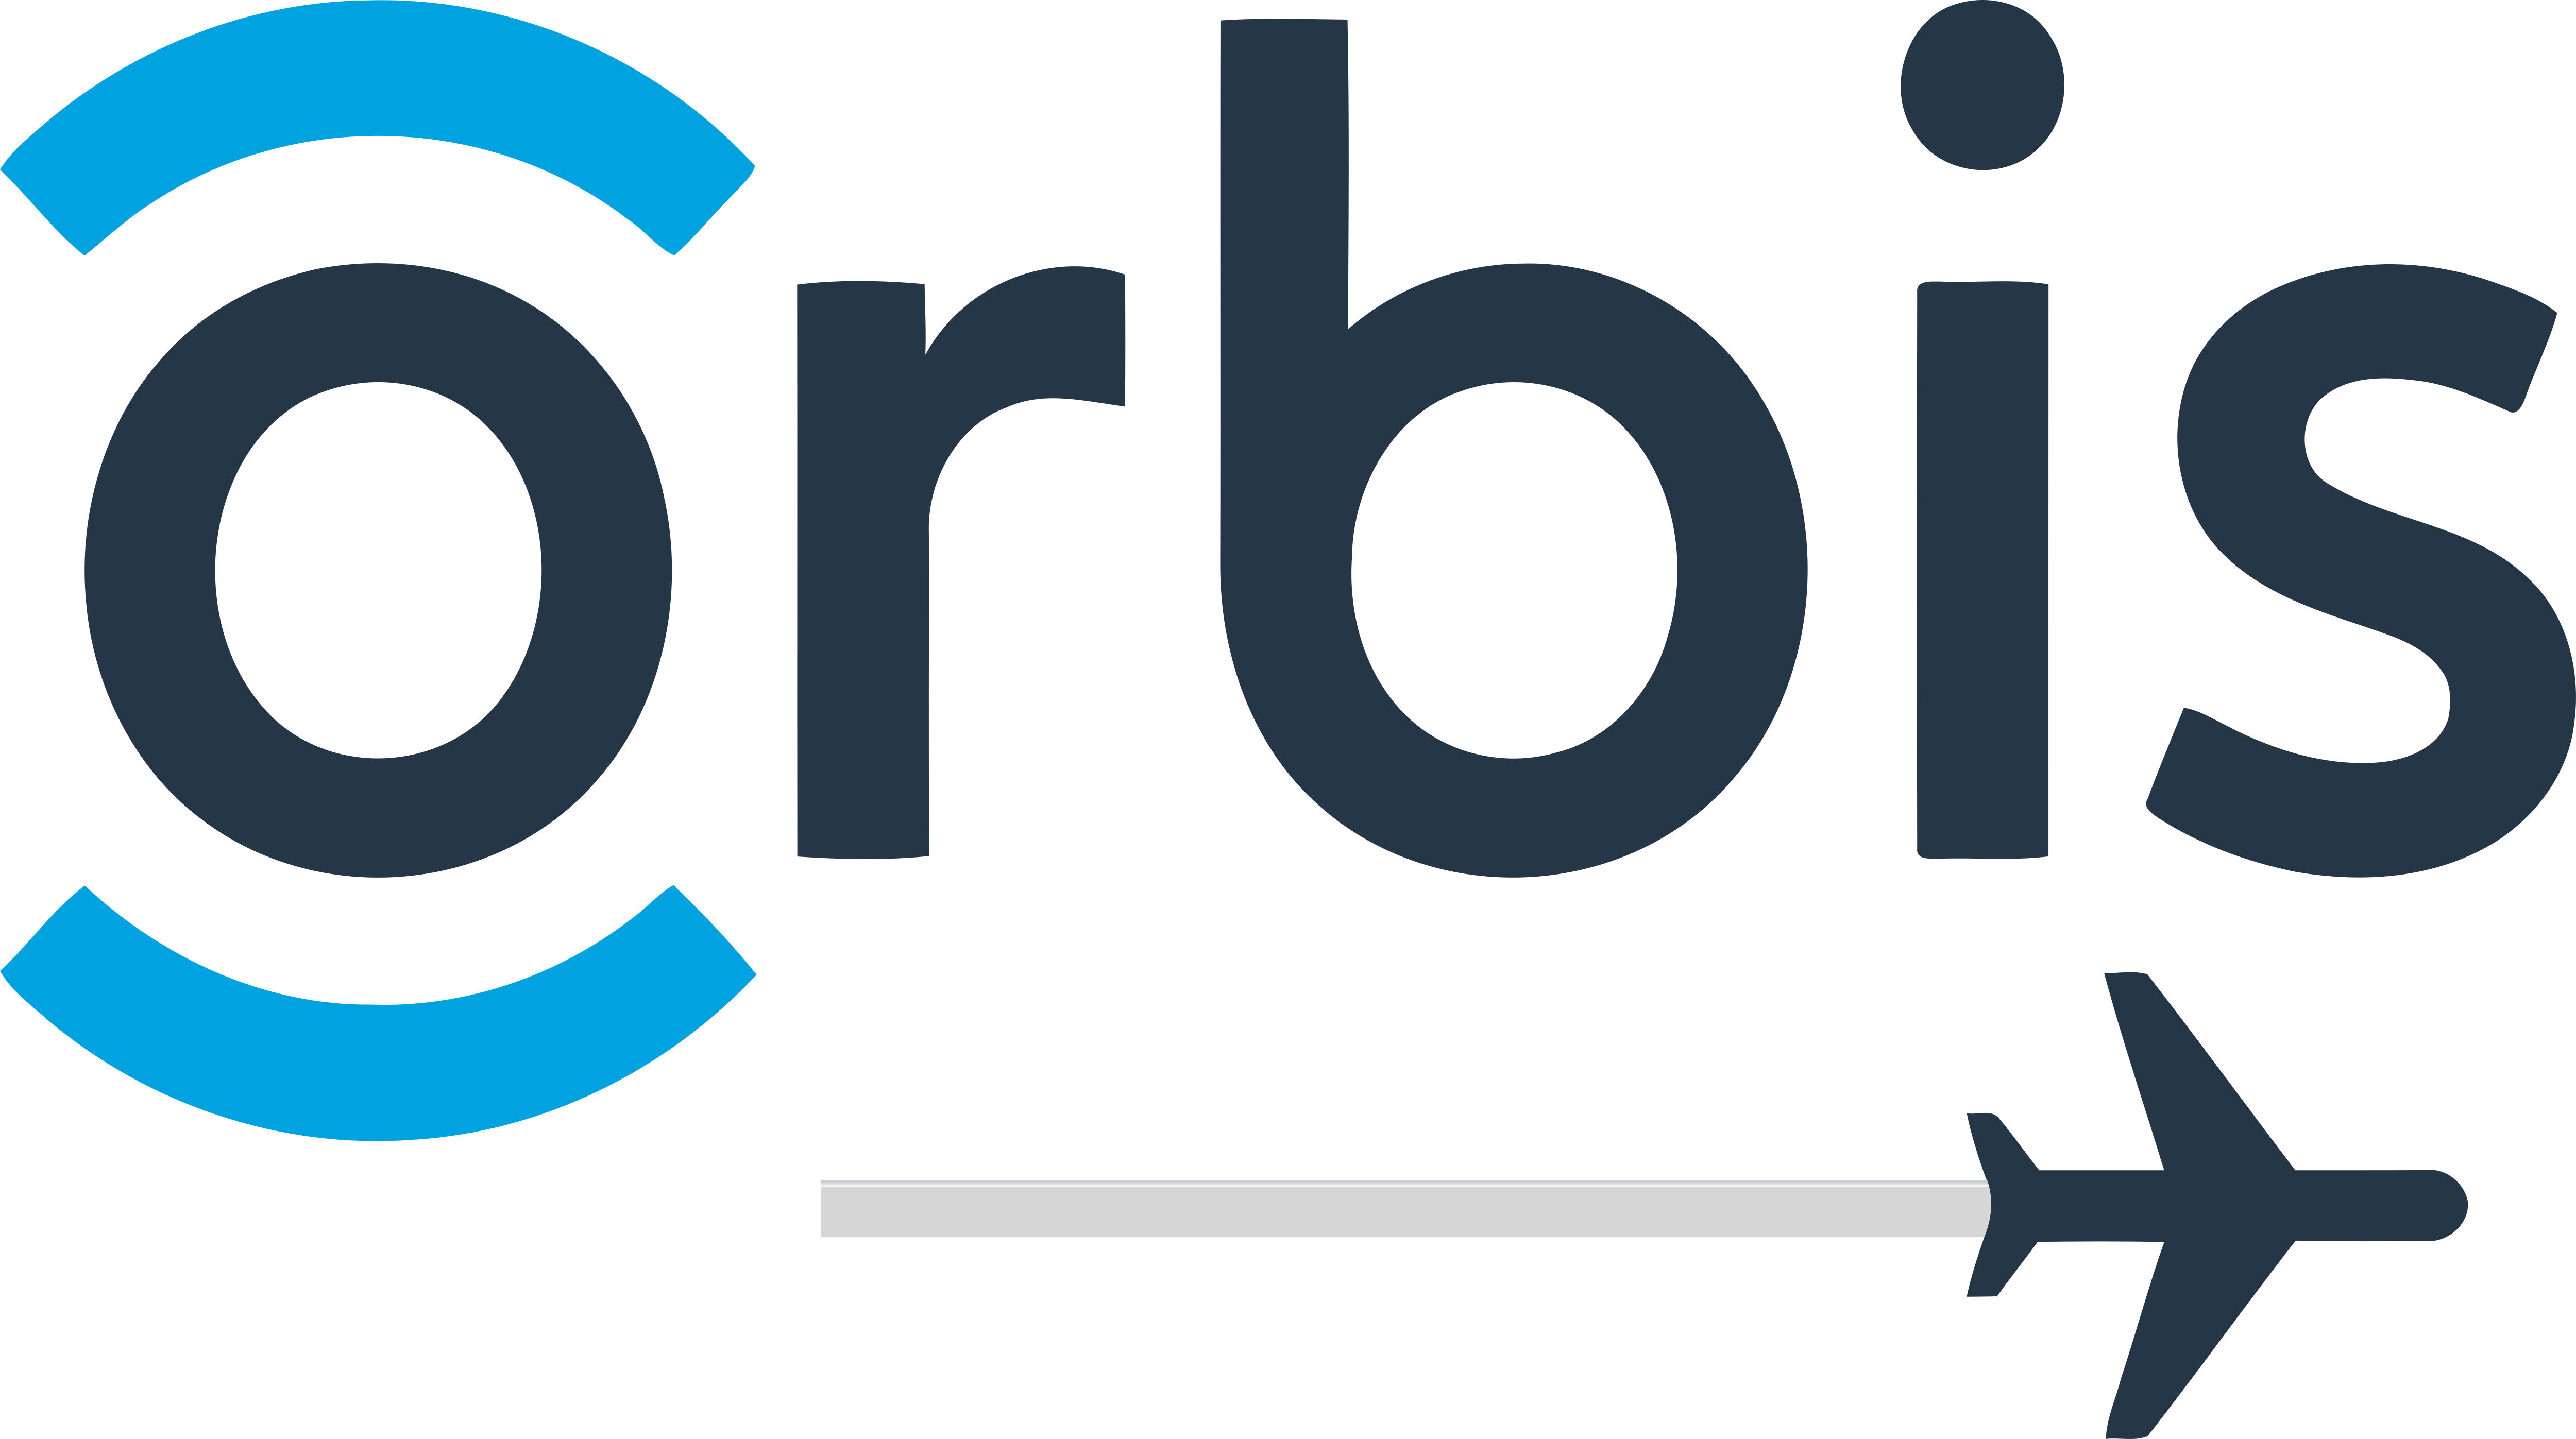 orbis international